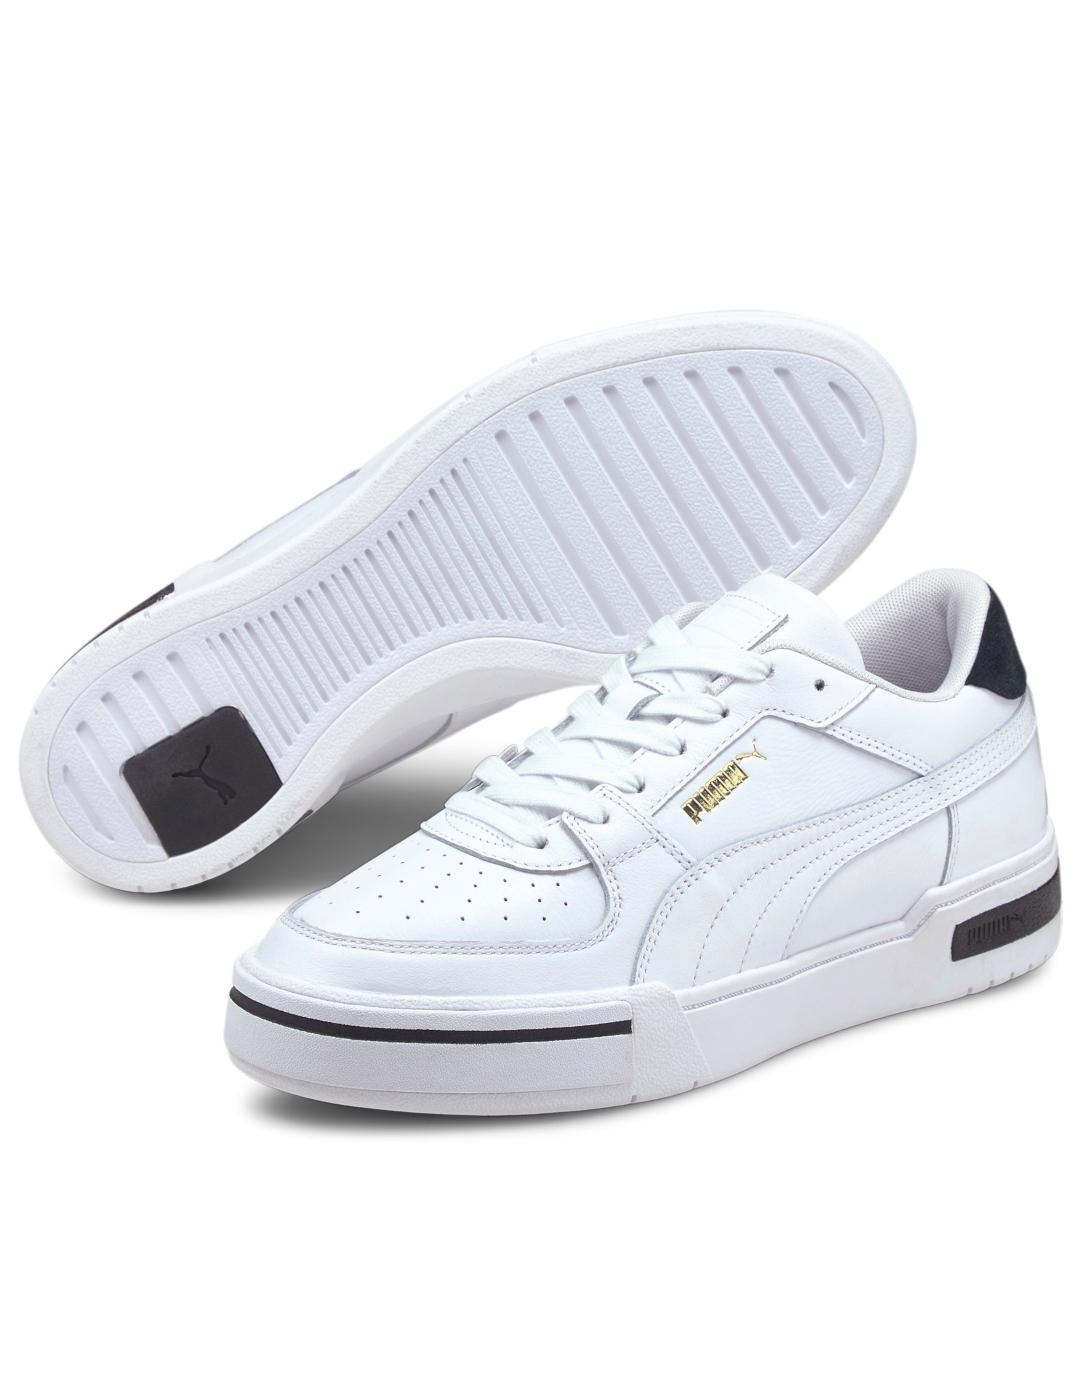 Zapatillas Ca Pro Classic para Mujer, Blanco